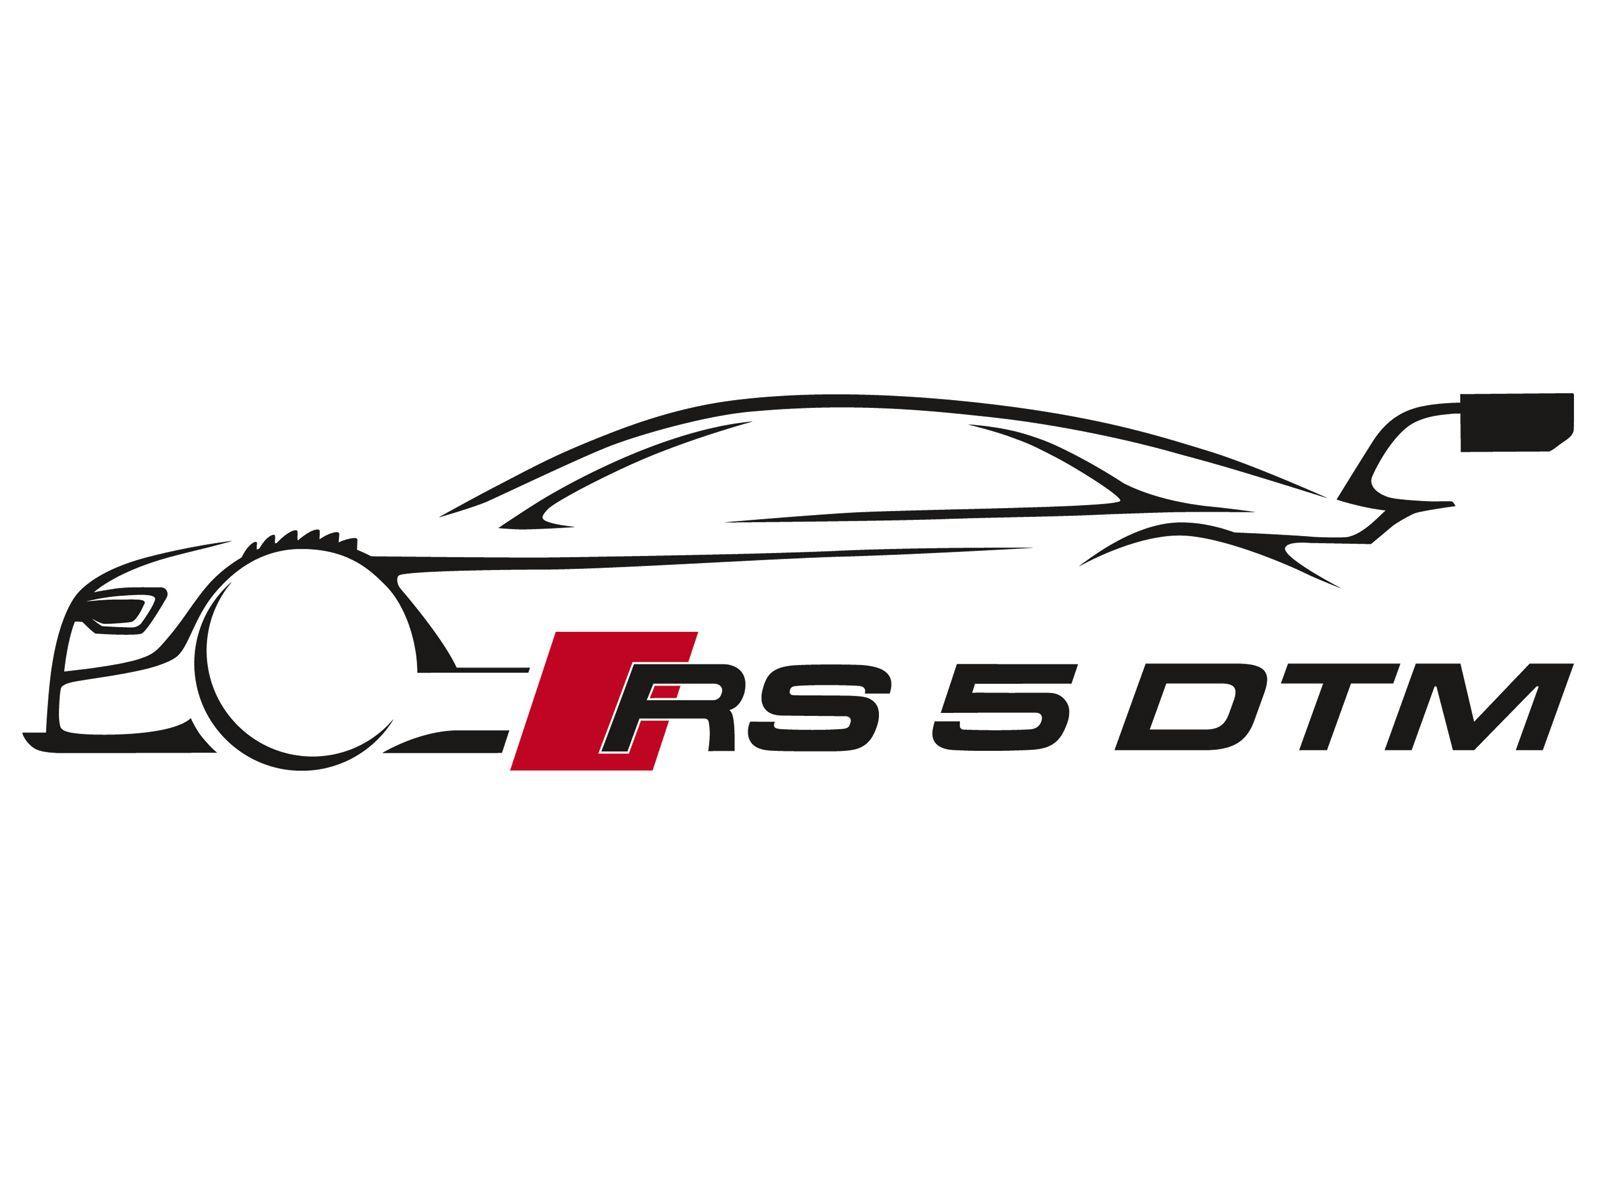 Audi RS5 Logo - Audi RS5 DTM Racecar Photo & Image Gallery